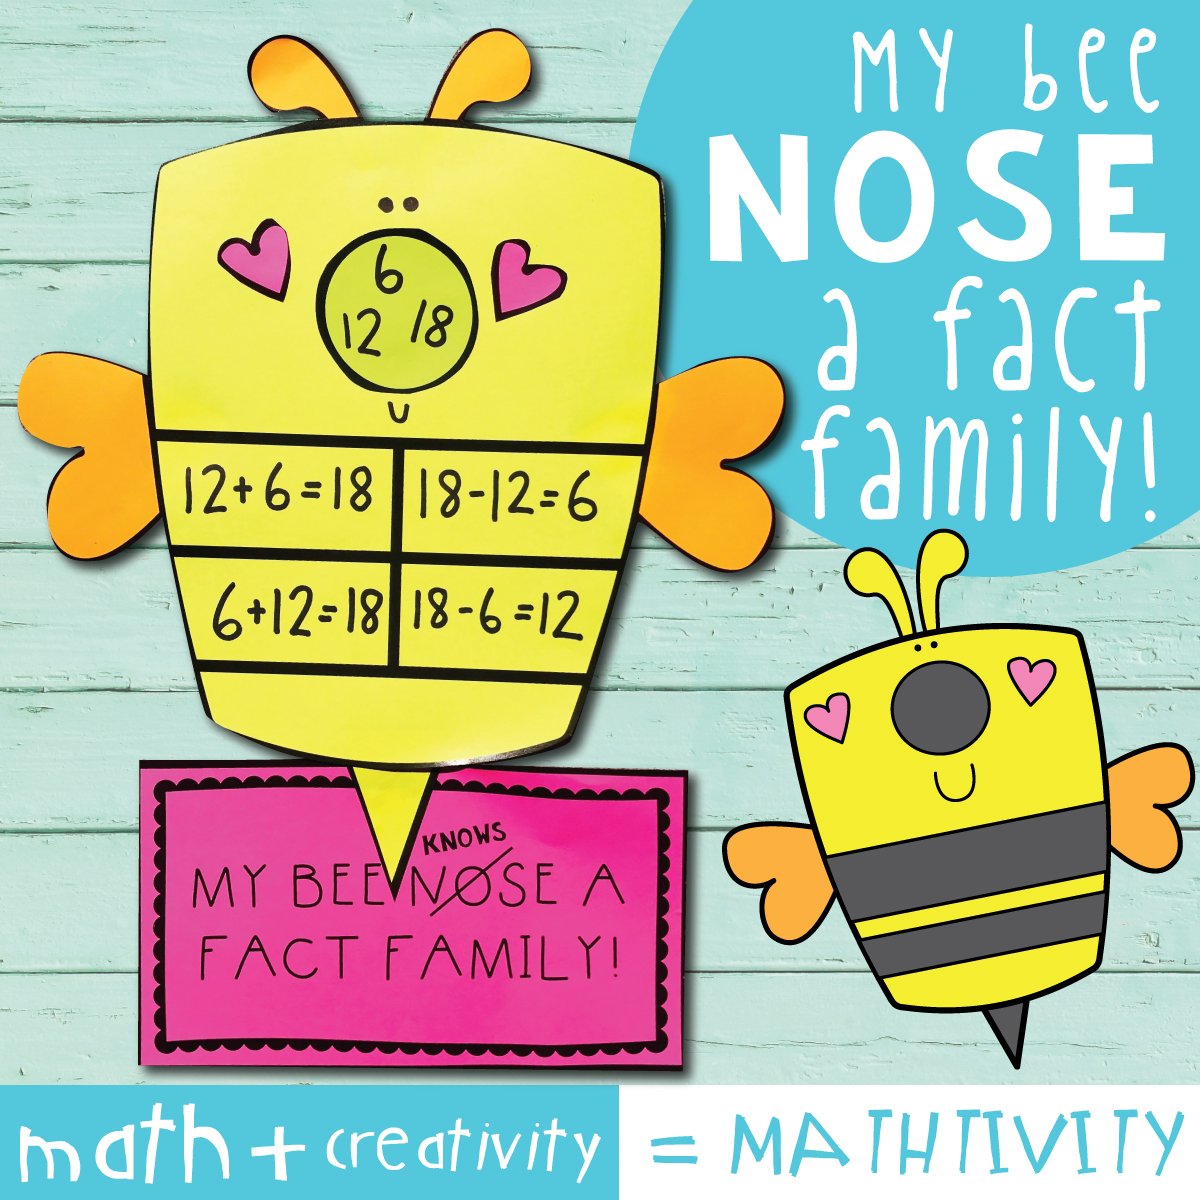 bee-nose-fact-familie-scraft.jpg